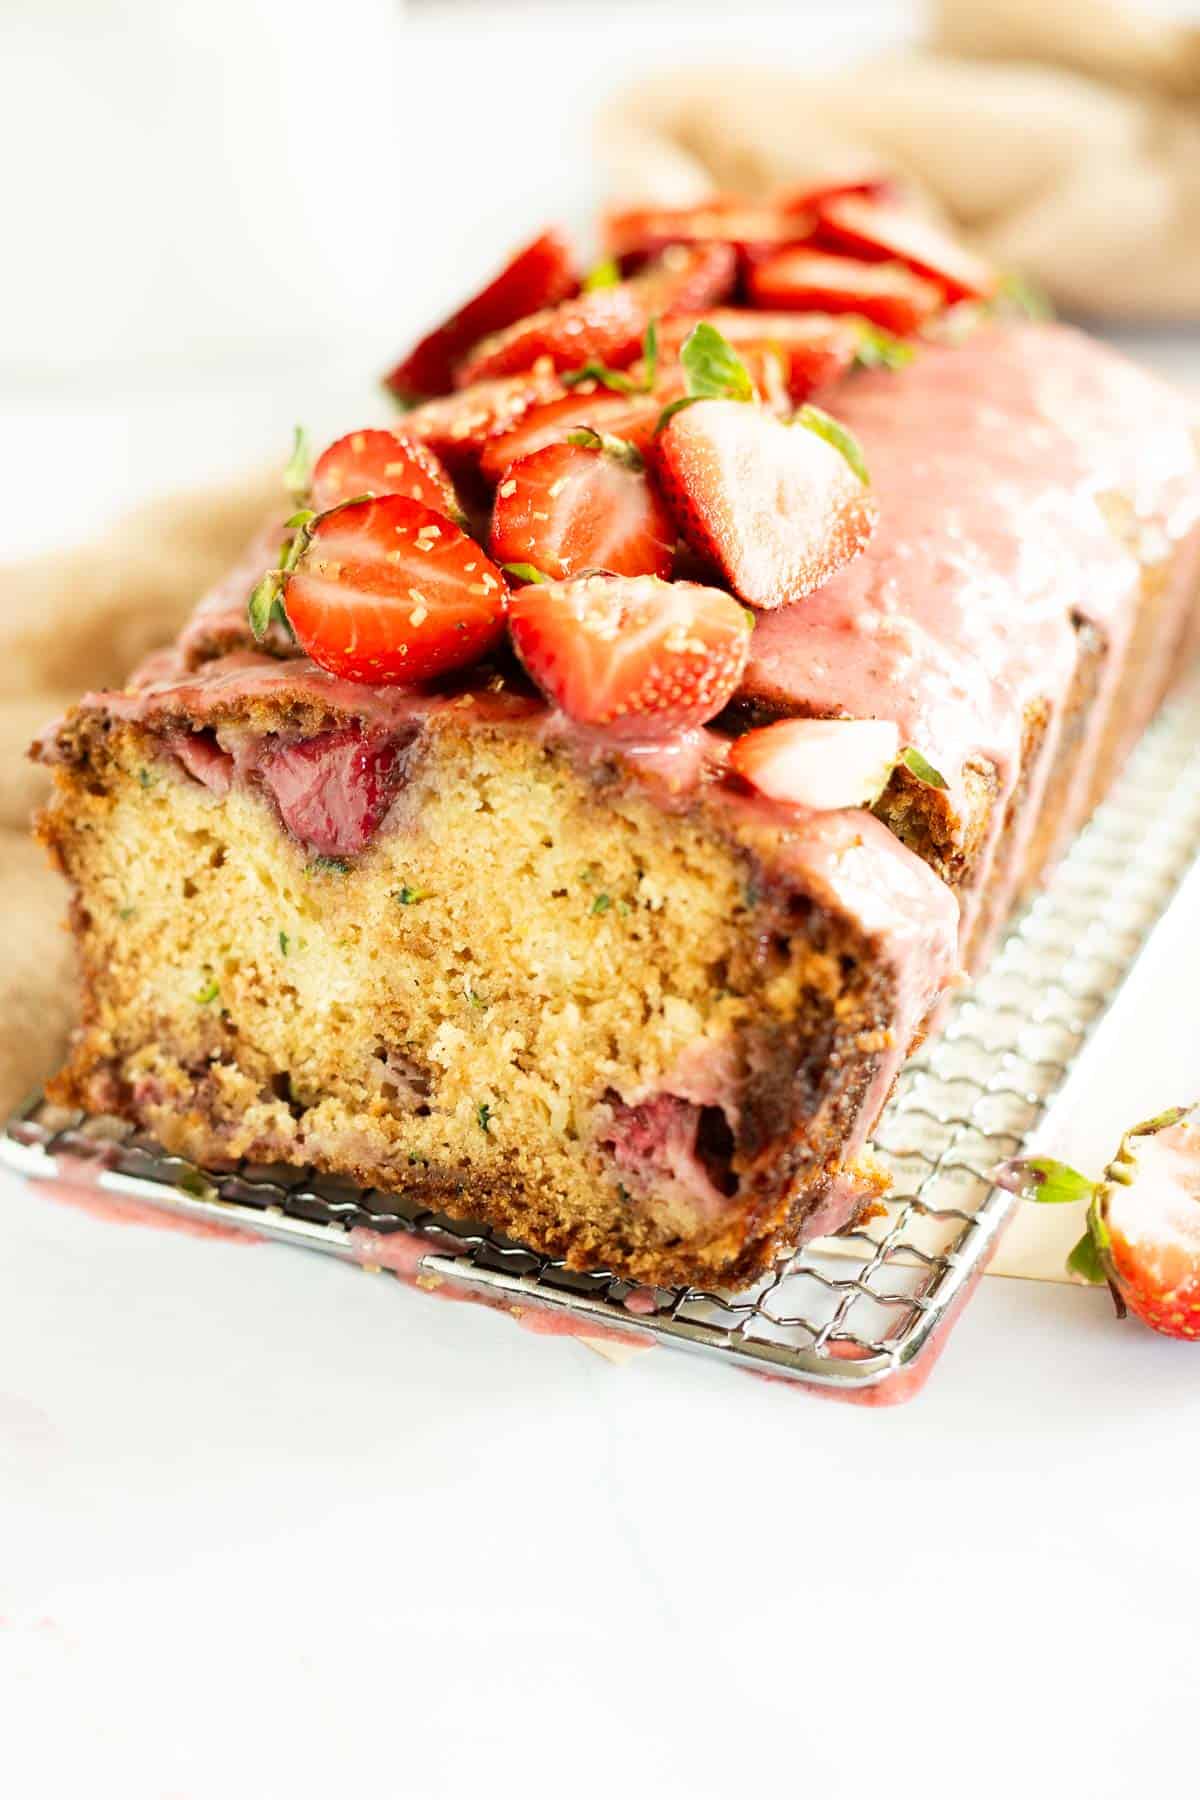 slice of zucchini bread with strawberries and a strawberry glaze.